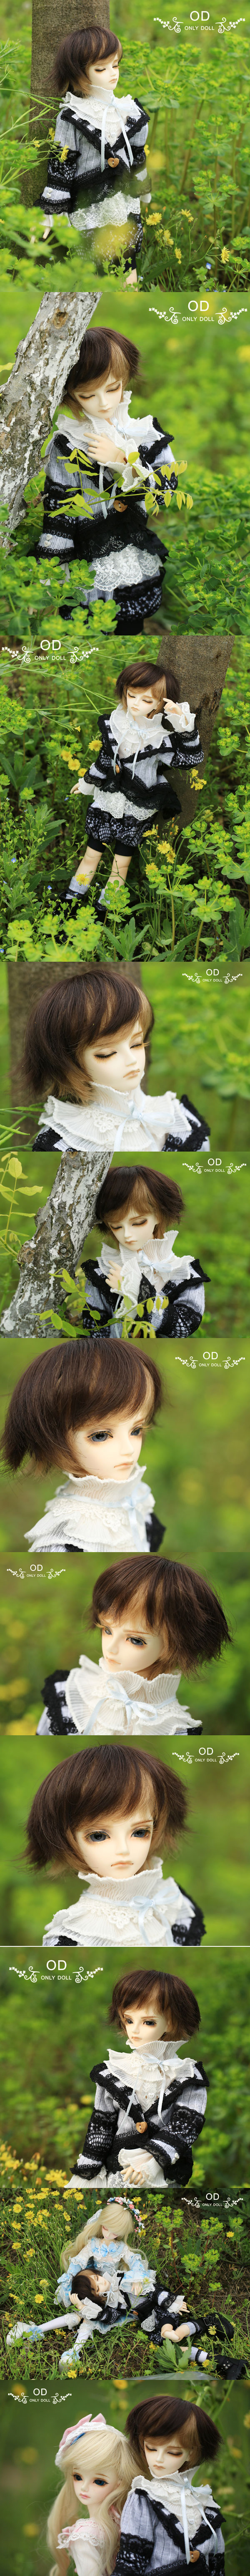 BJD Jun(Eyes are sleeping) Boy 44cm Boll-jointed doll